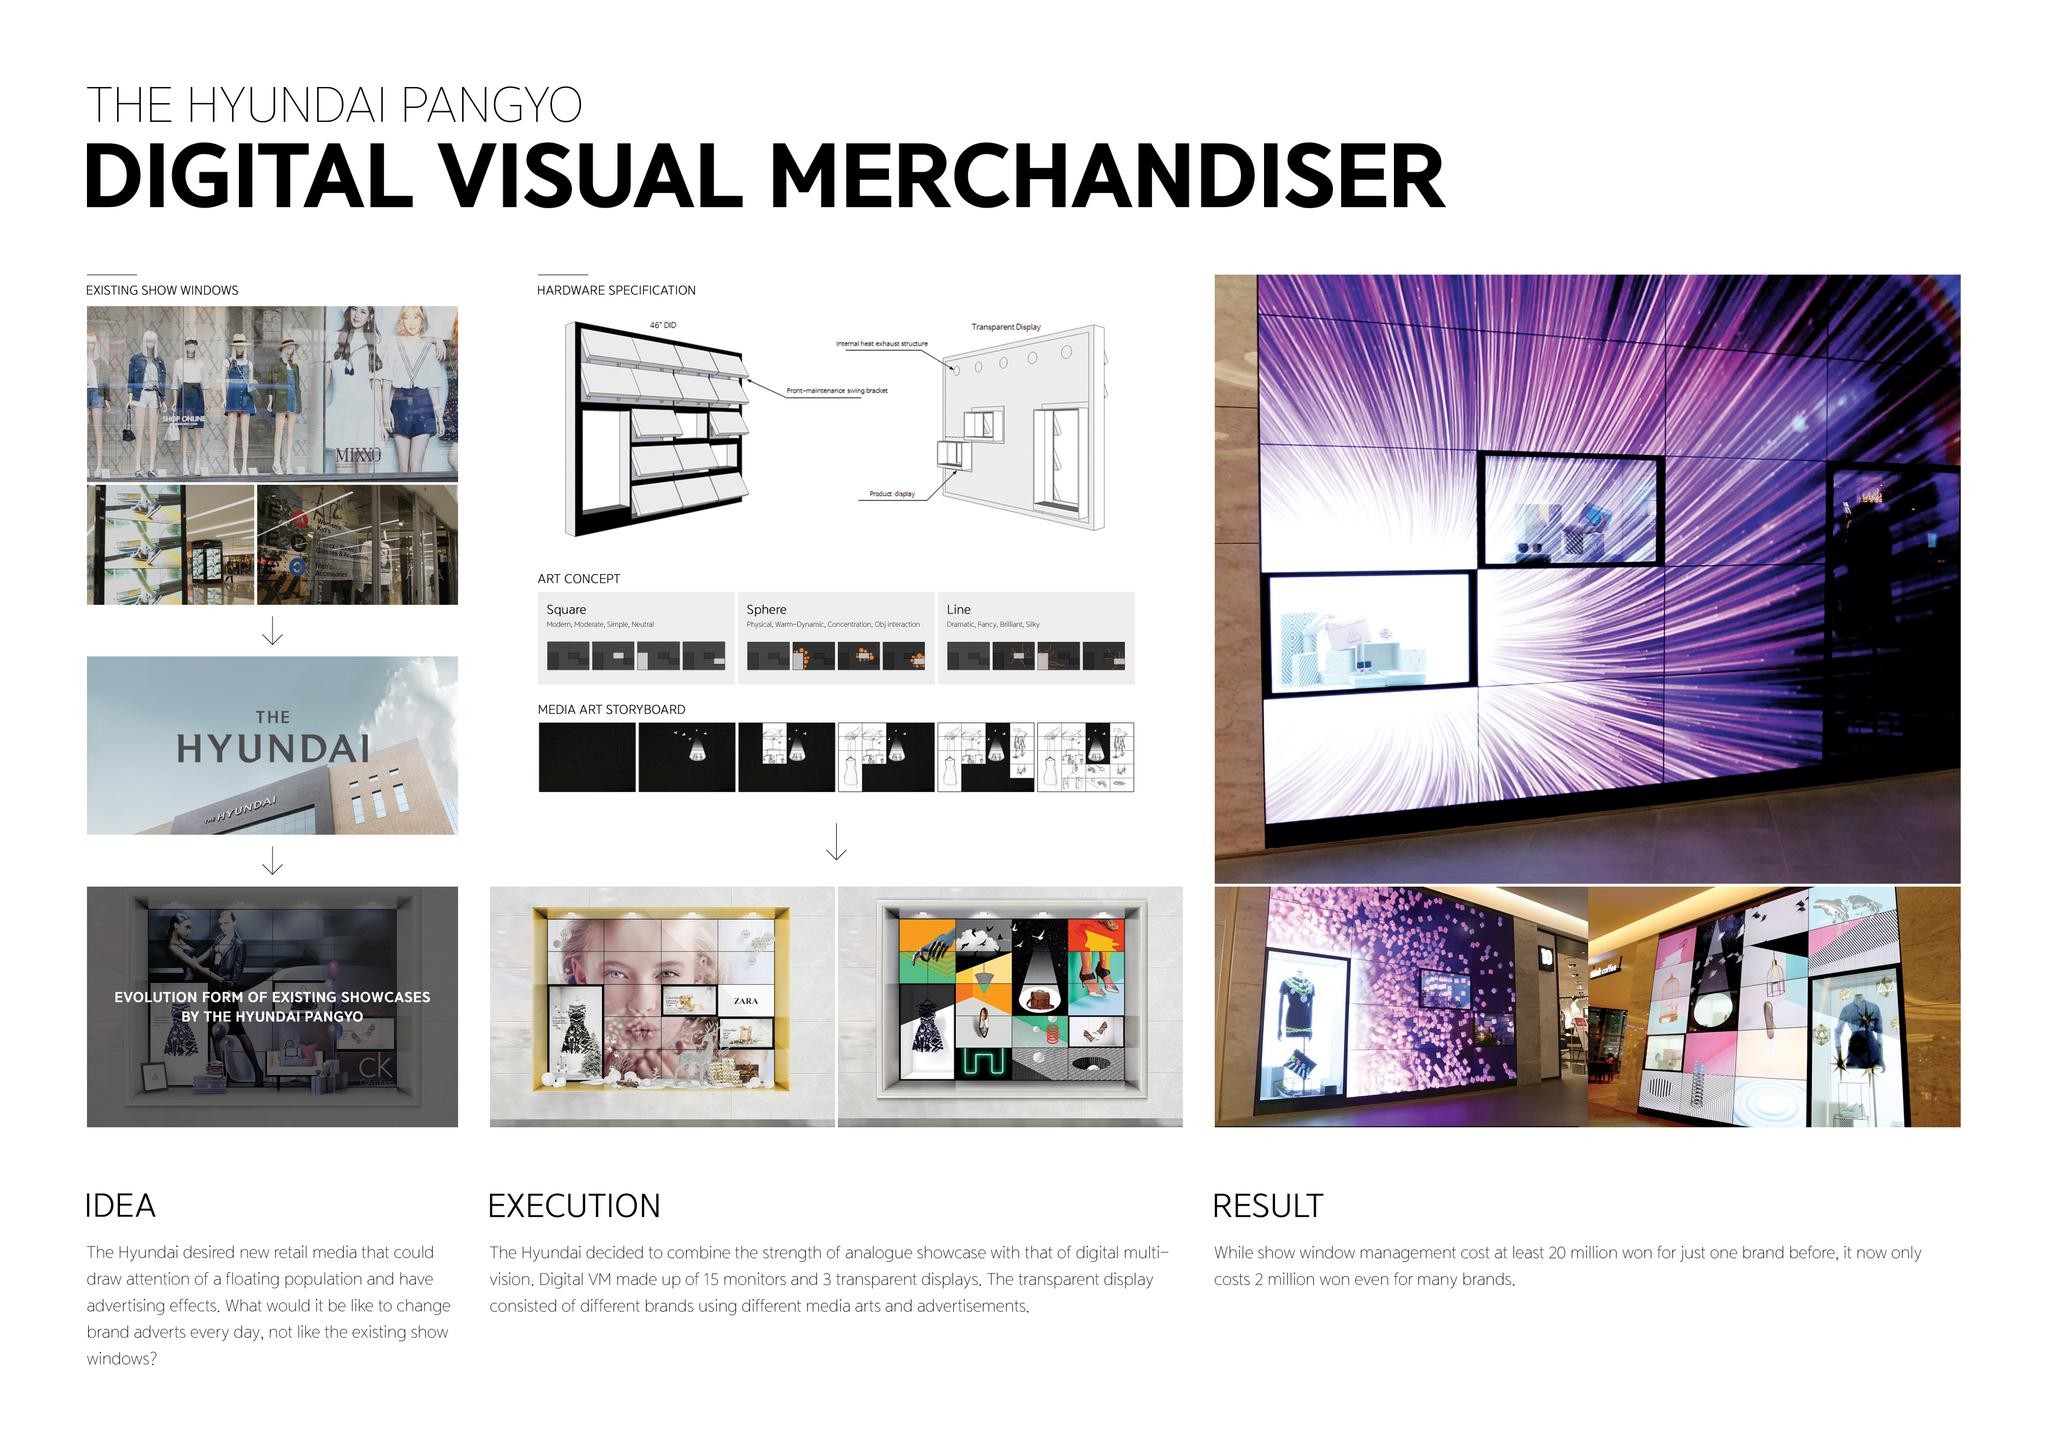 The Hyundai Digital Visual Merchandiser